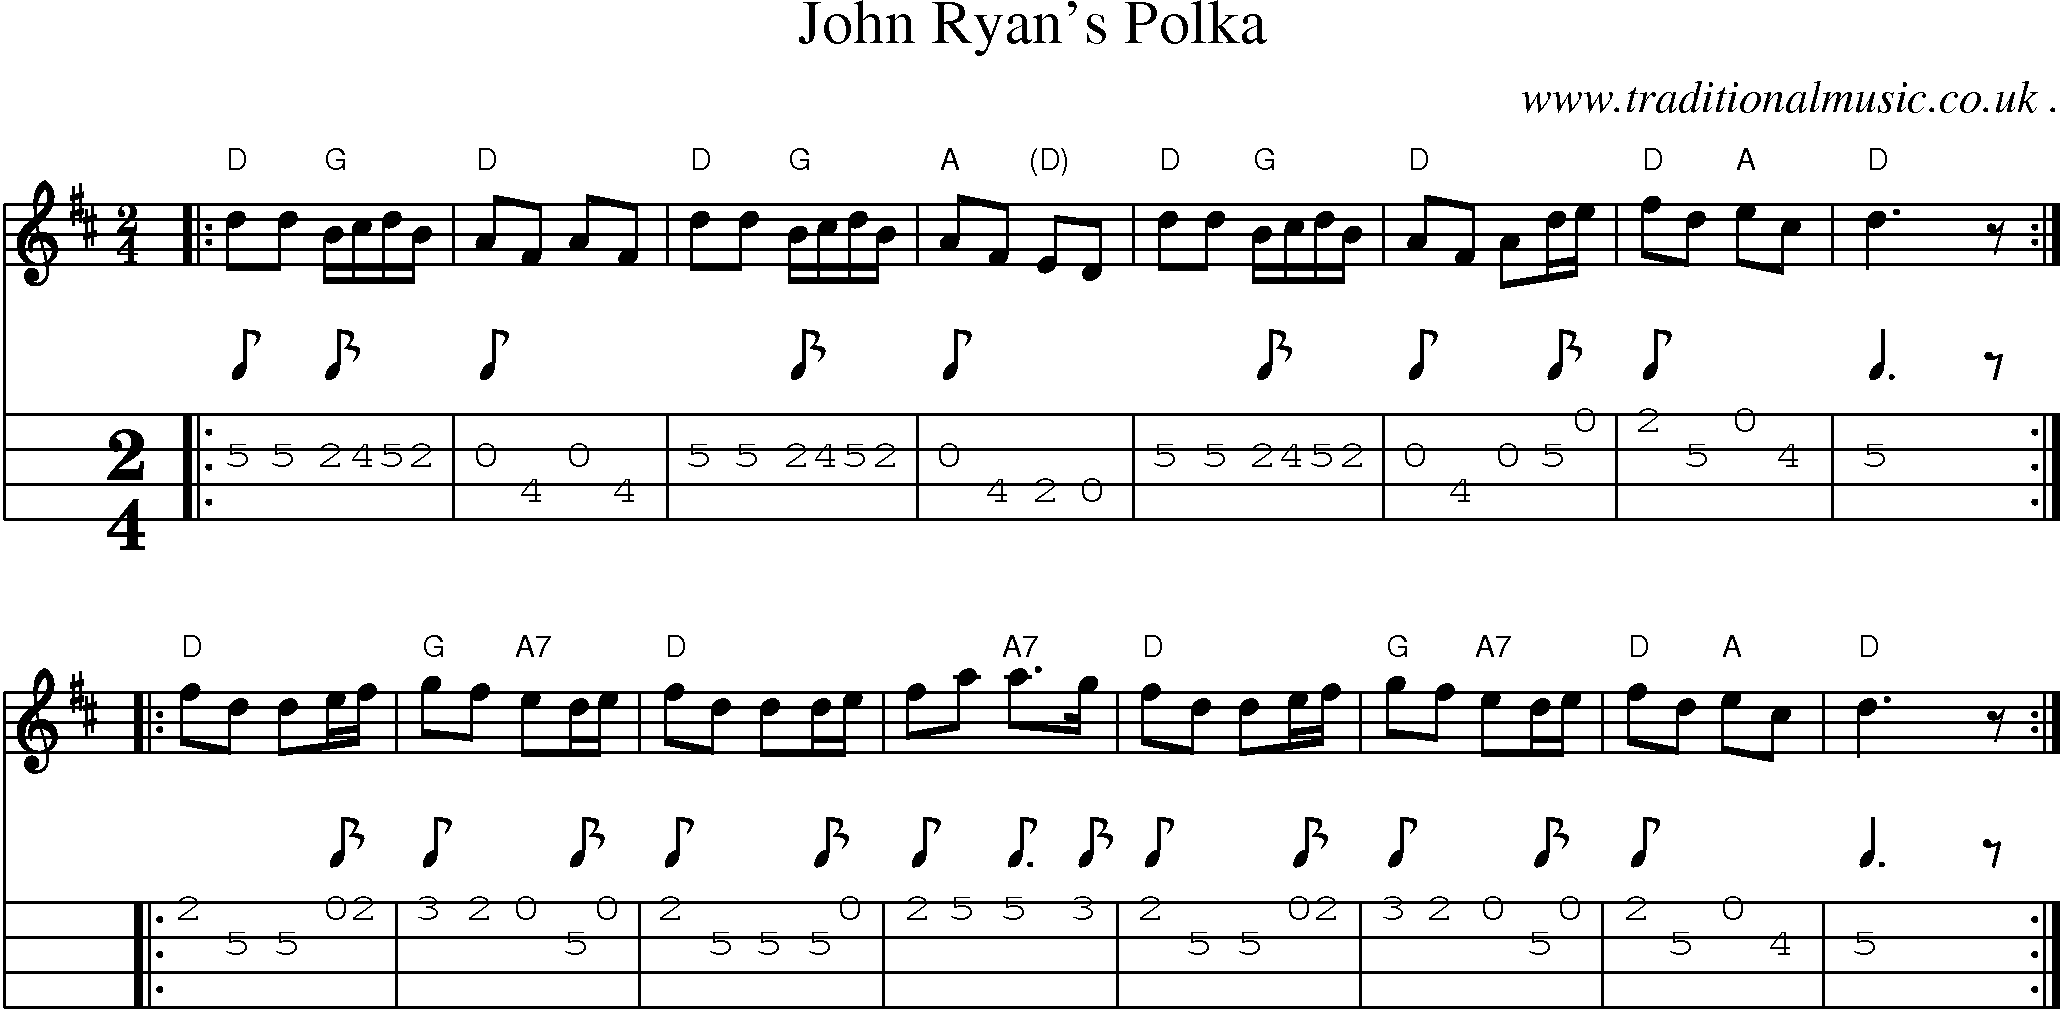 Sheet-music  score, Chords and Mandolin Tabs for John Ryans Polka